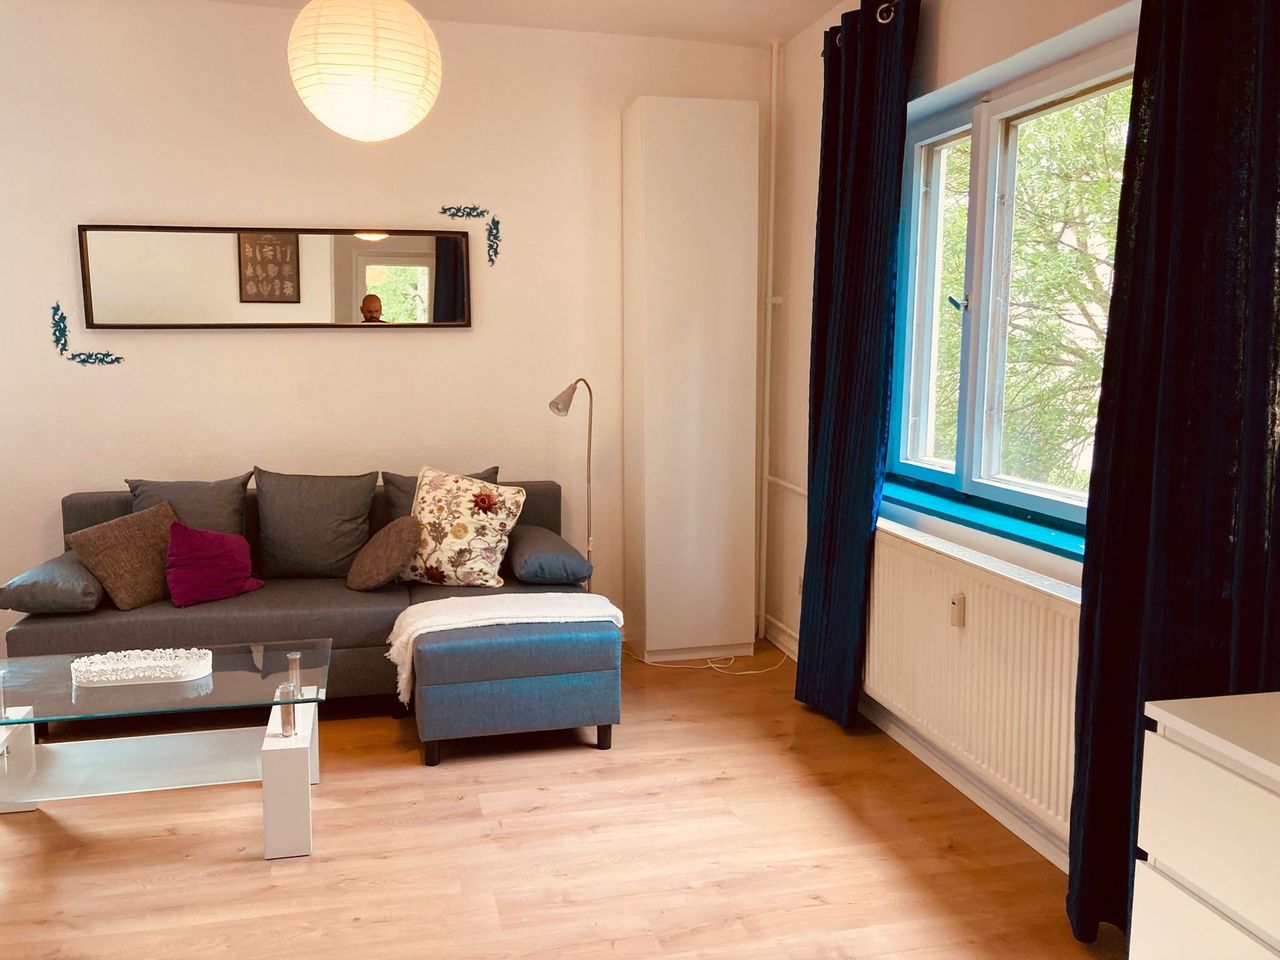 2 bedroom apartment in Charlottenburg / Spandau